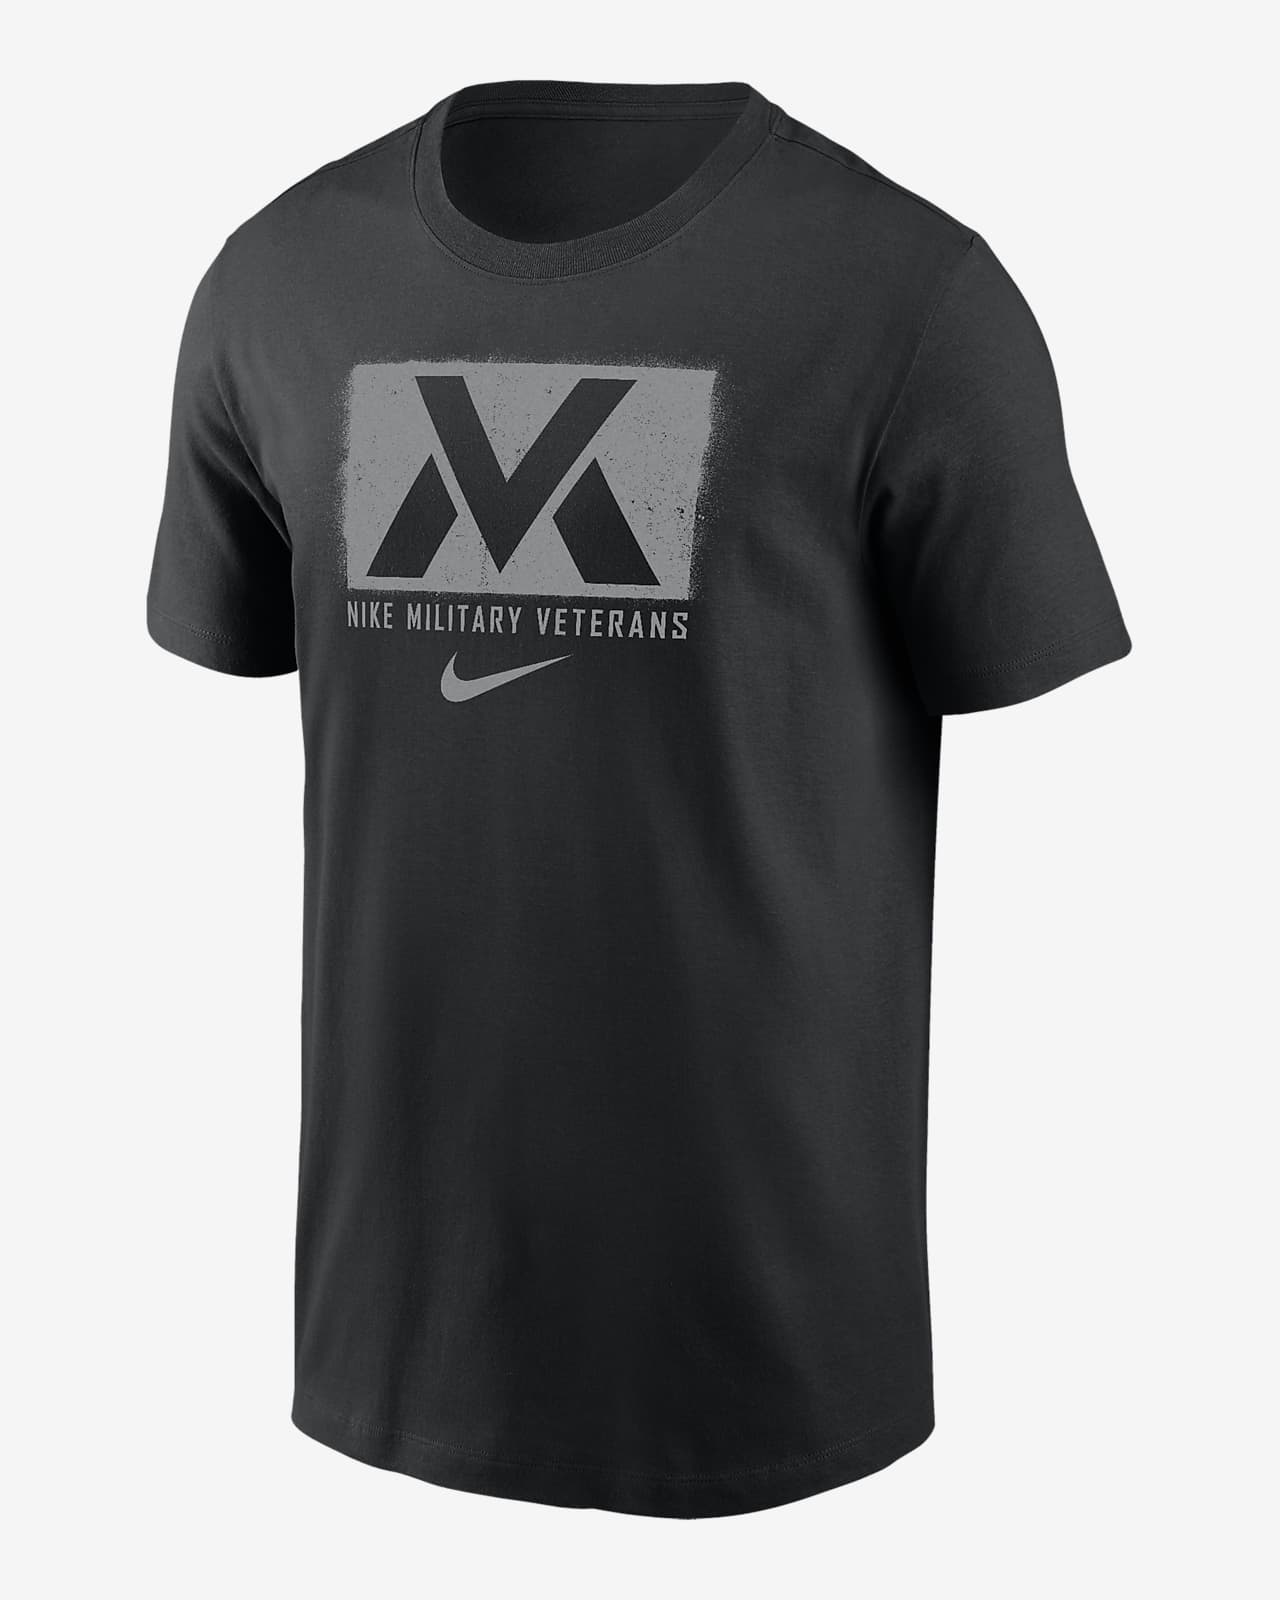 Nike Military Veterans Men's T-Shirt